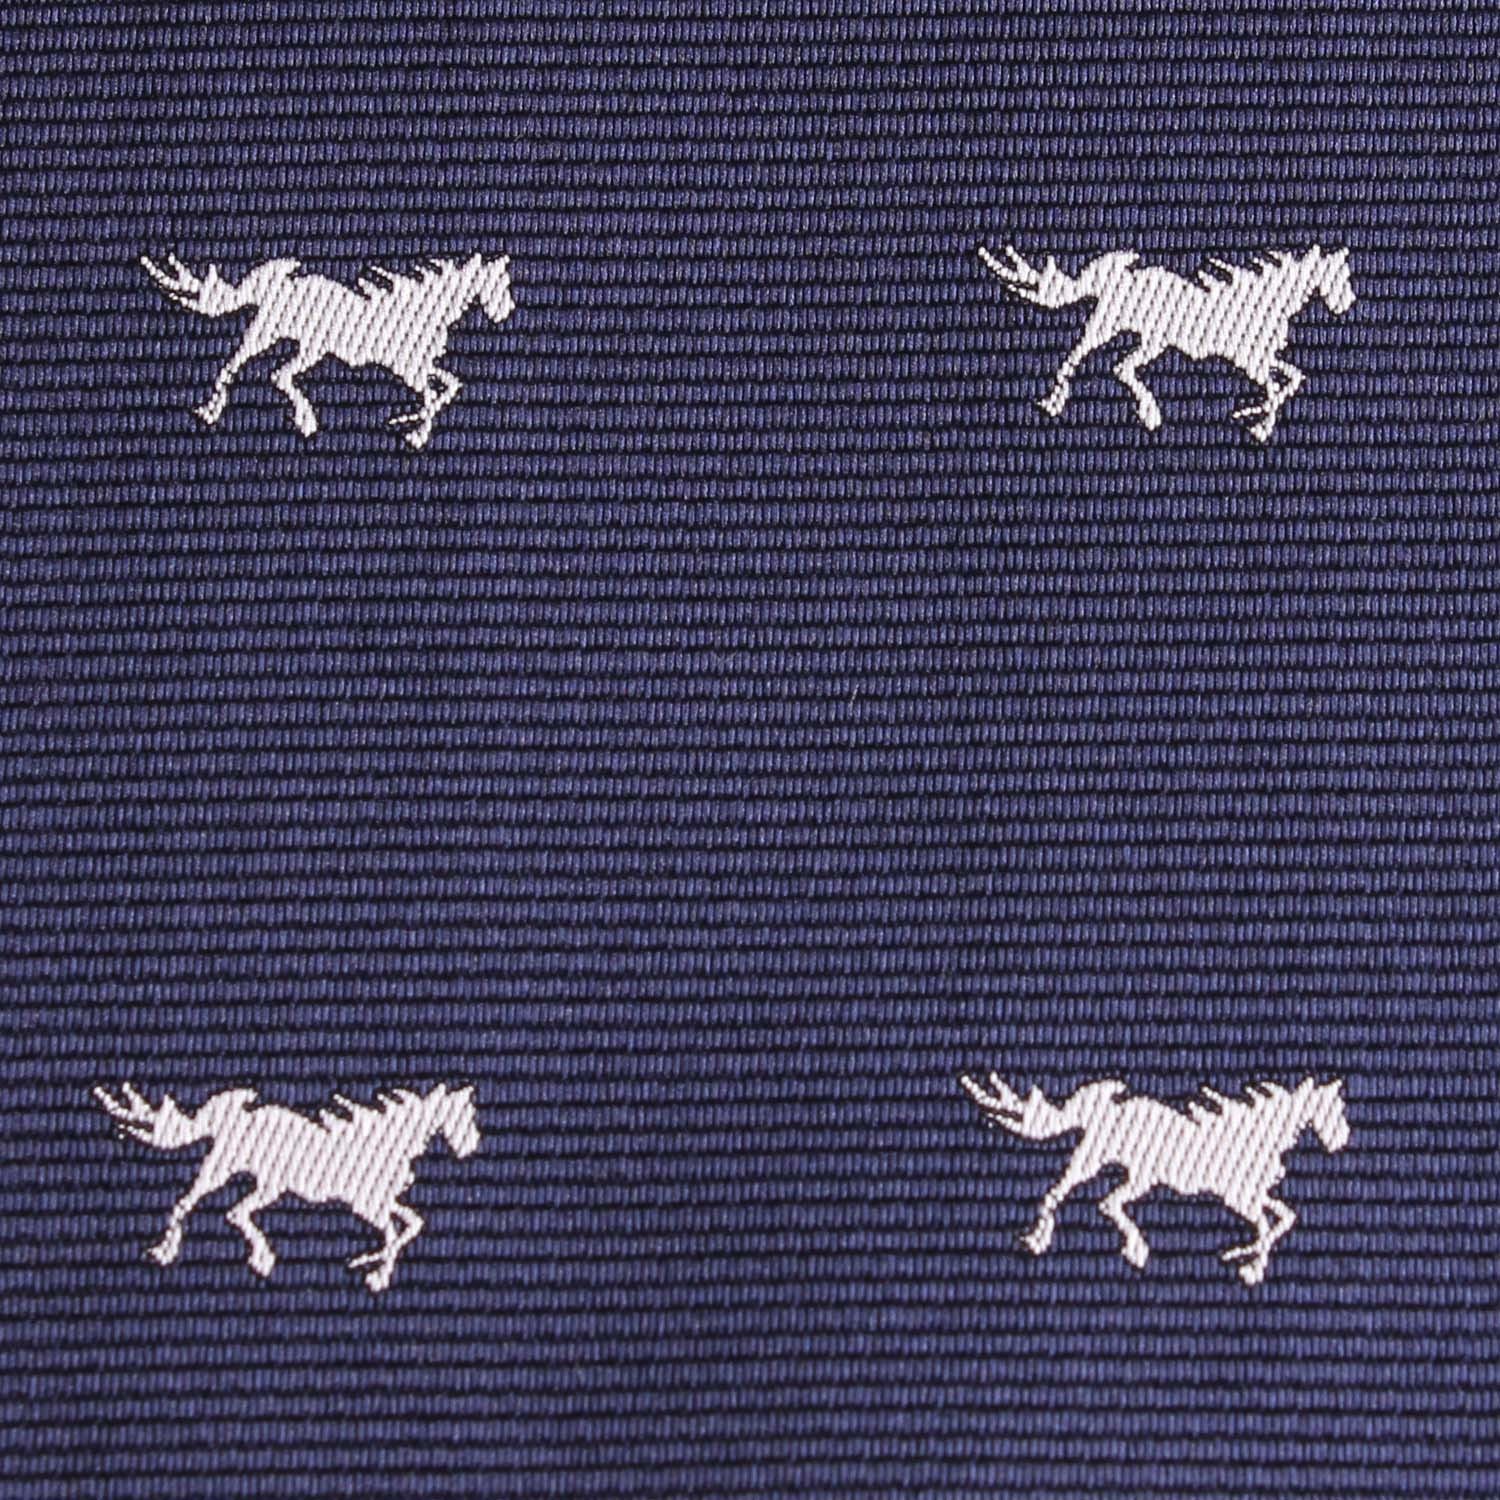 Navy Blue Race Horse Fabric Self Tie Bow Tie M106